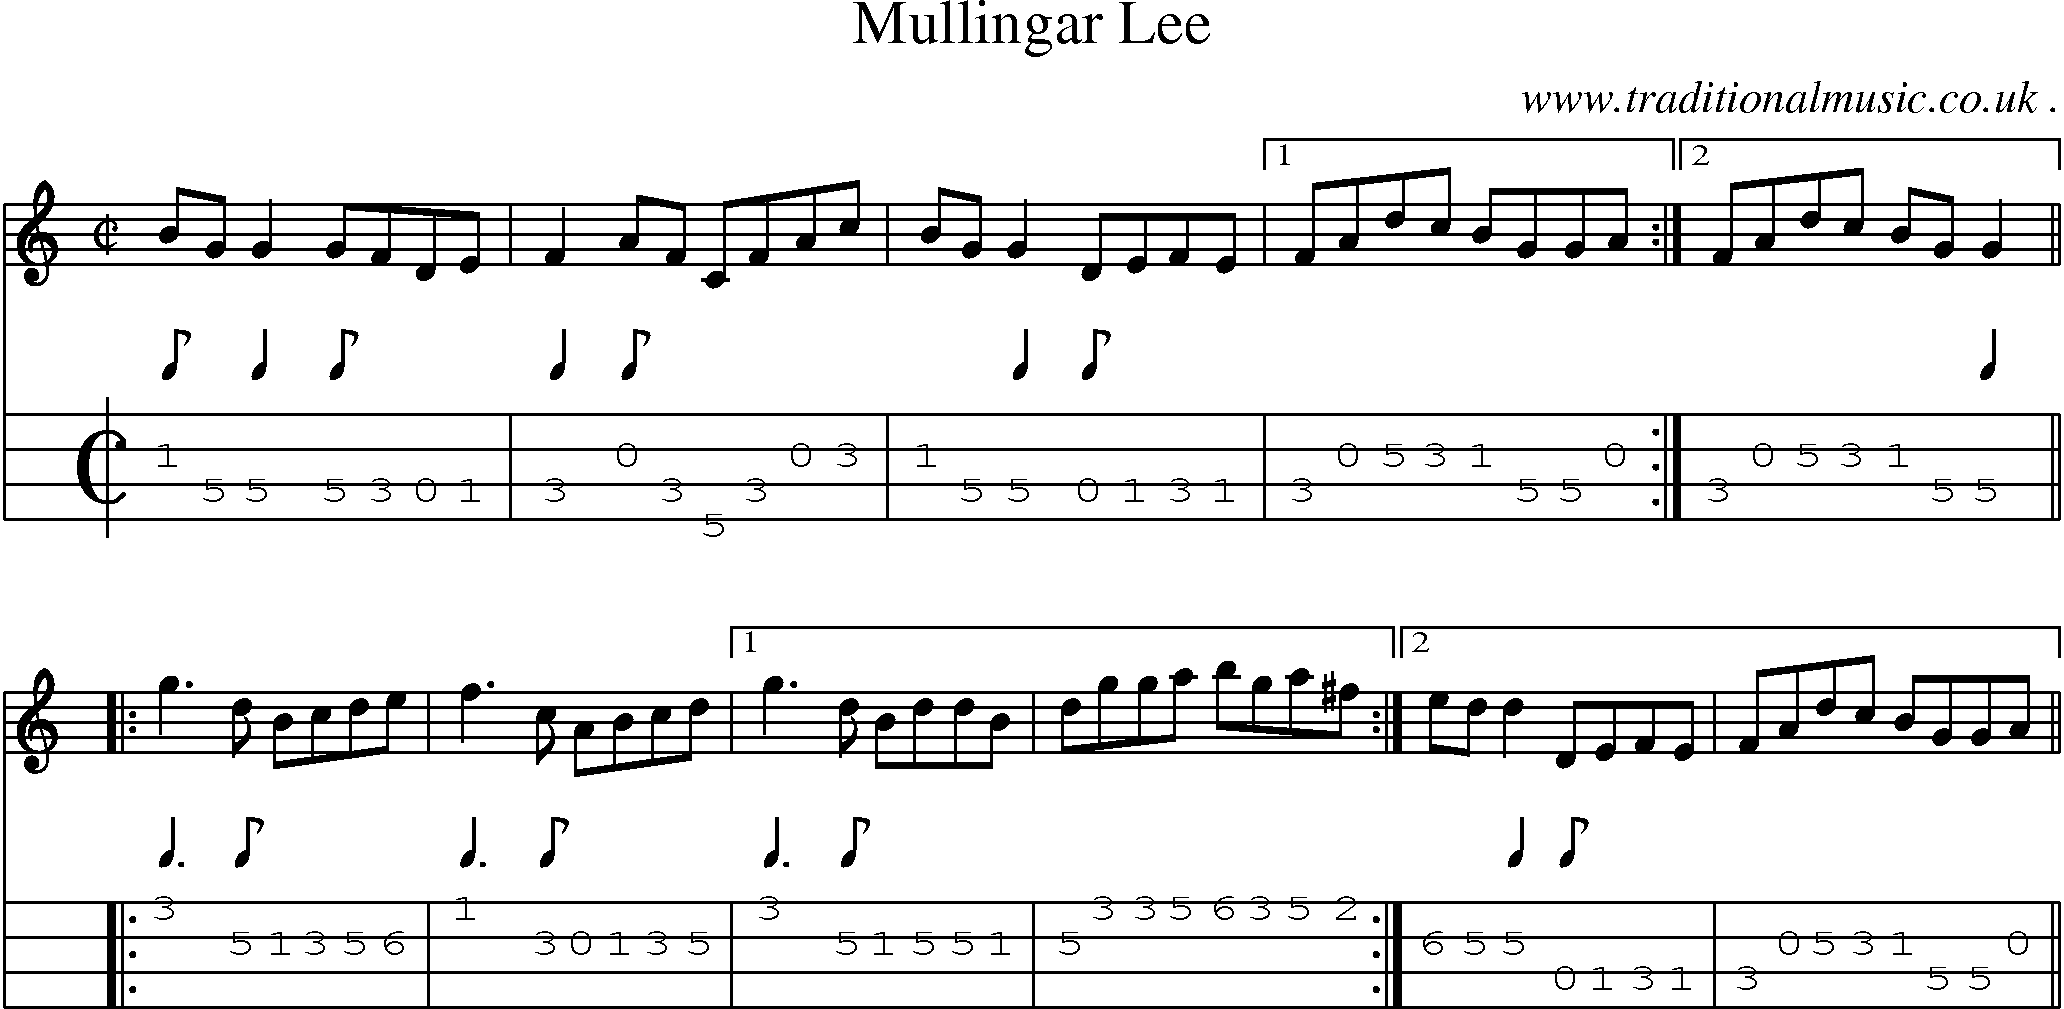 Sheet-Music and Mandolin Tabs for Mullingar Lee